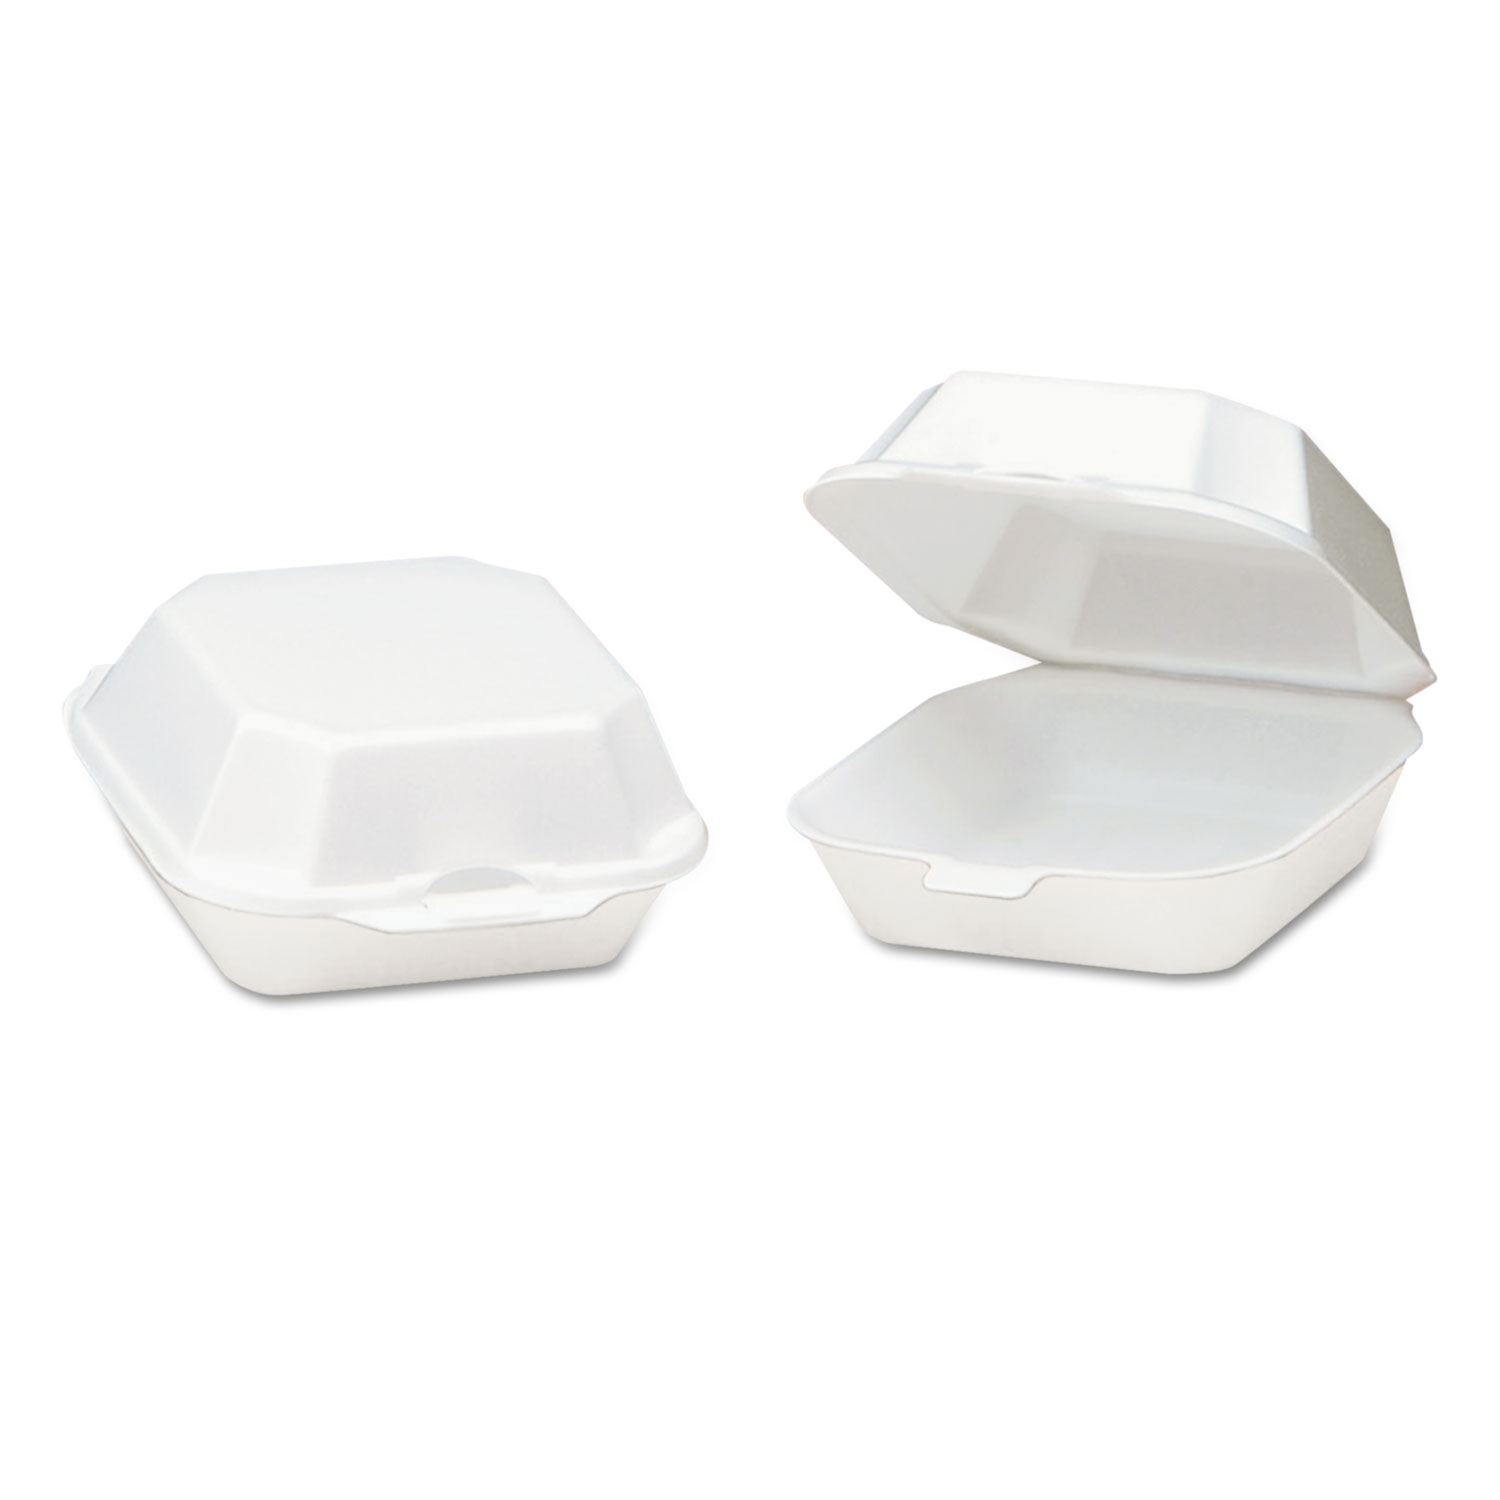  Genpak 22400--- Foam Hinged Container, Sandwich, 5-1/8x5-1/3x2-3/4, White, 125/Bag, 4 Bags/CT (GNP22400) 